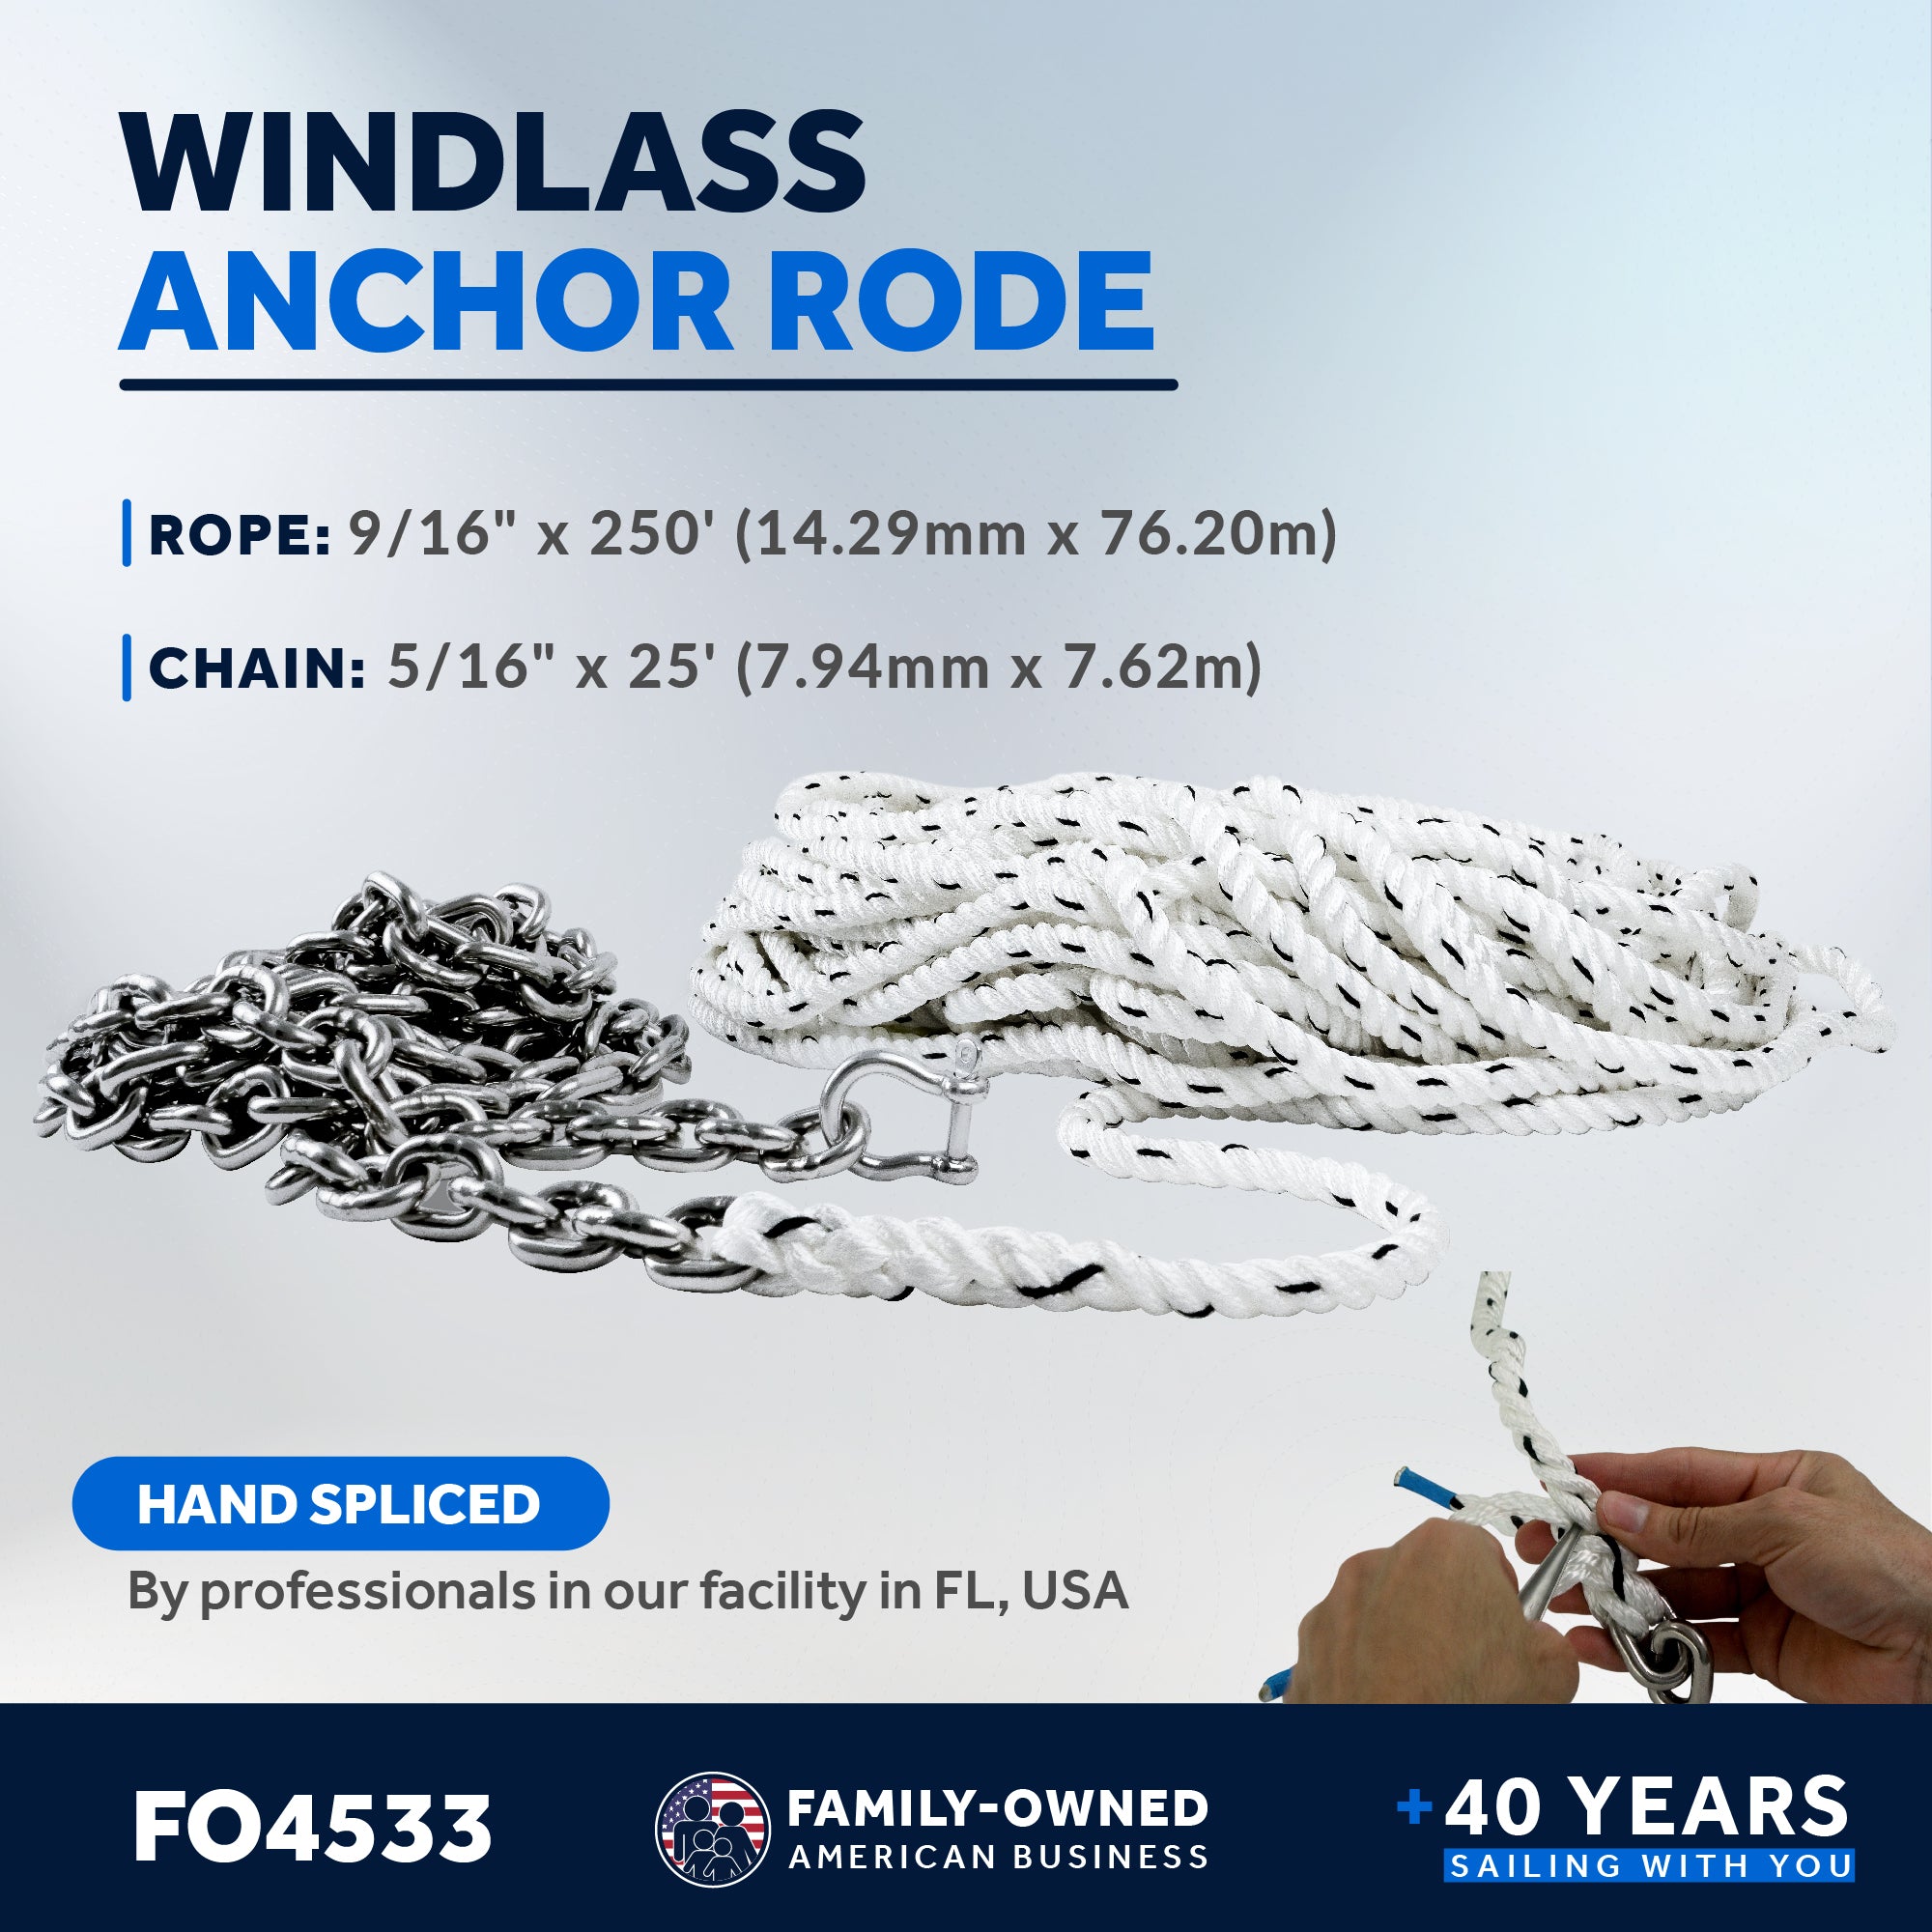 Windlass Anchor Rode, 9/16" x 250' Nylon 3-Strand Rope, 5/16" x 25' G4 Stainless Steel Chain - FO4533